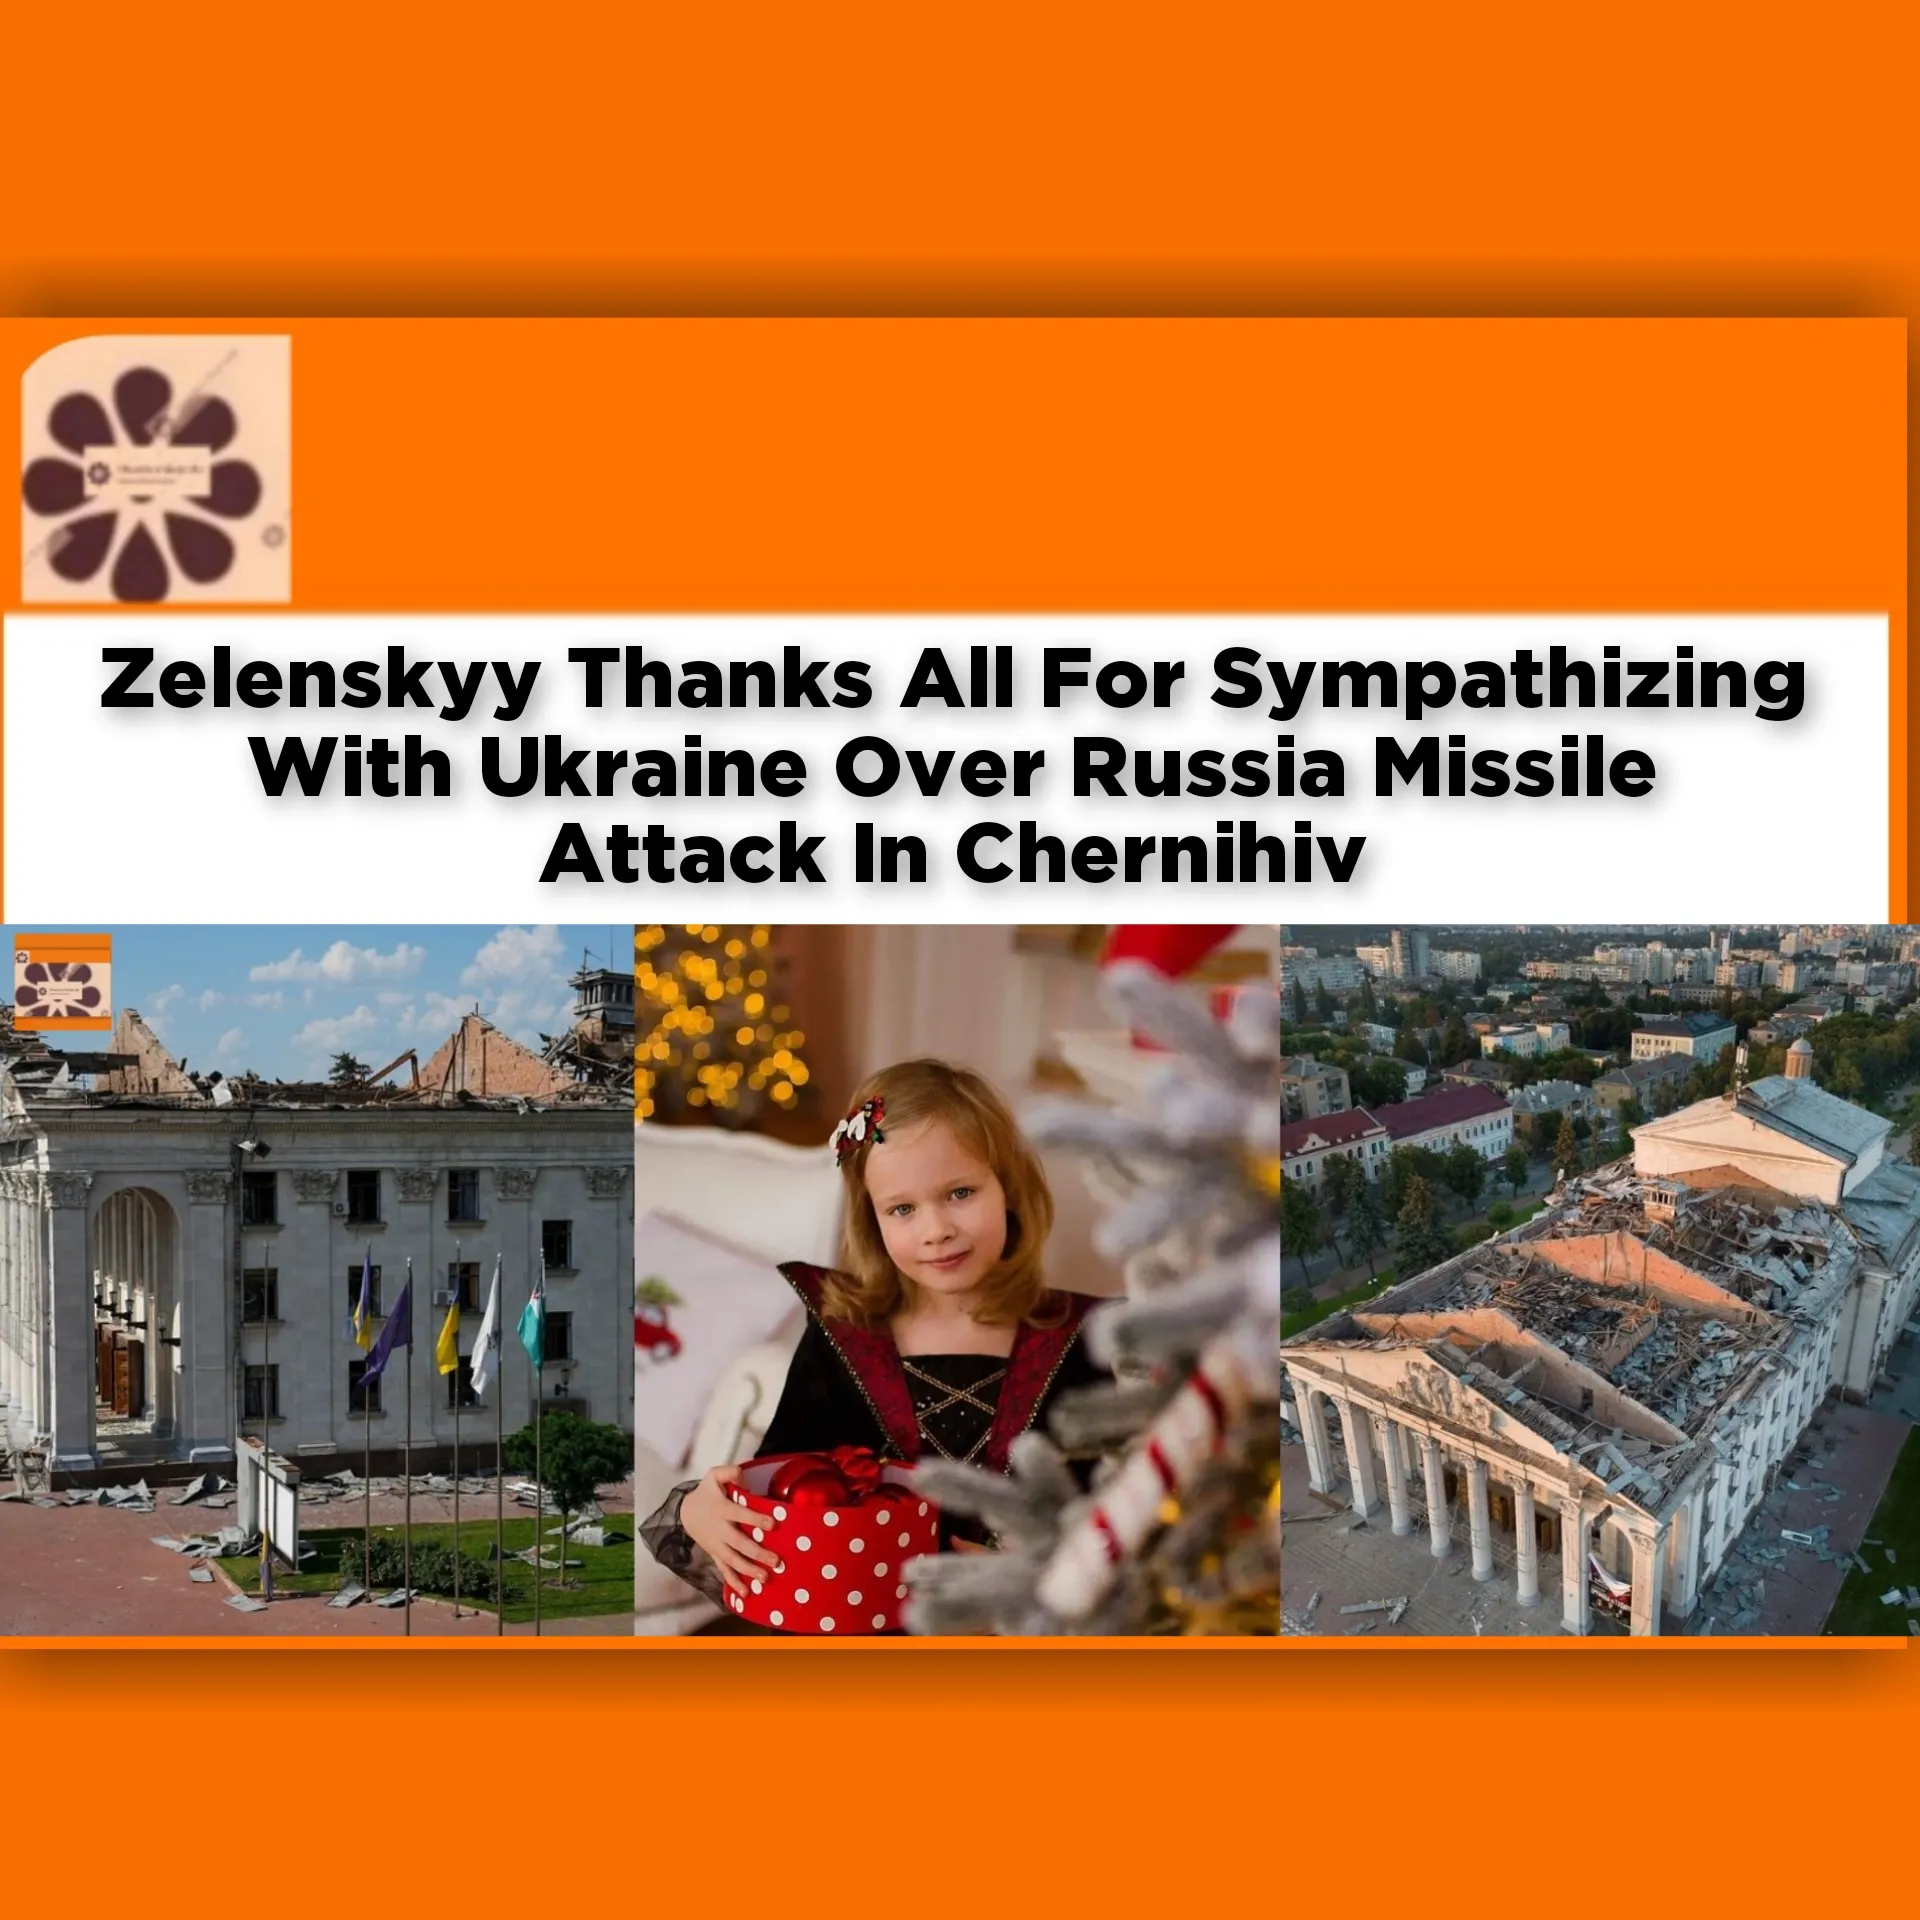 Zelenskyy Thanks All For Sympathizing With Ukraine Over Russia Missile Attack In Chernihiv ~ OsazuwaAkonedo #Chernihiv #Drones #Missile #Putin #Russia #Sofia #Ukraine #Vladimir #Volodymyr #Zelenskyy